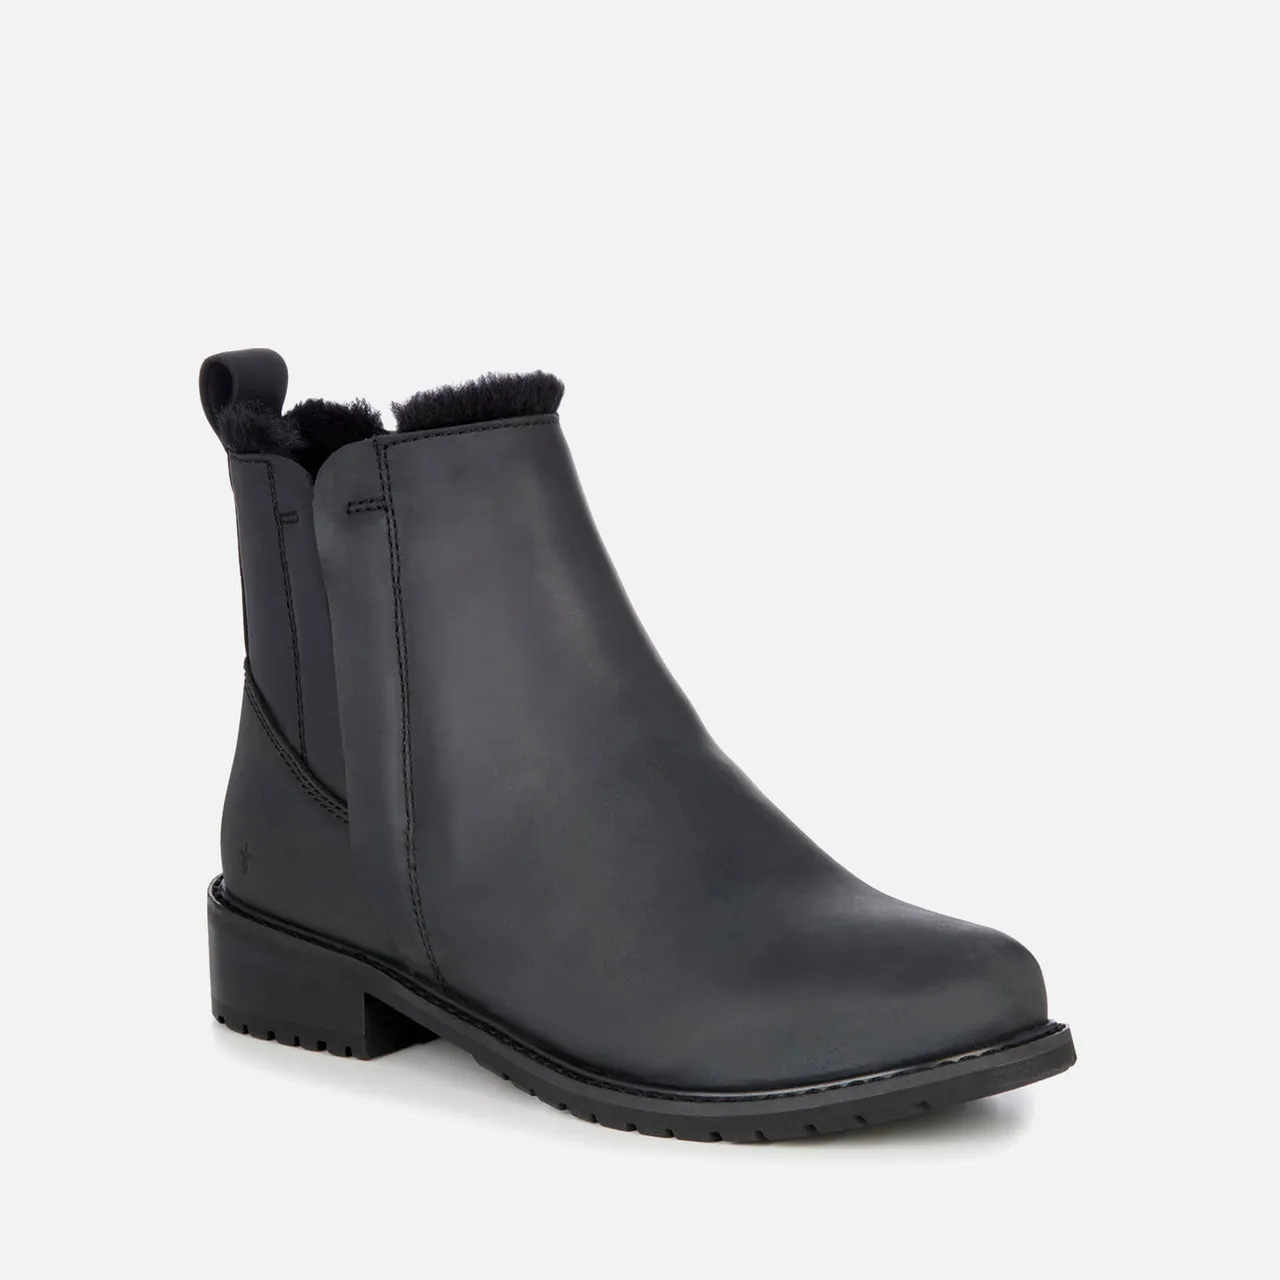 EMU Australia Women's Pioneer Leather Ankle Boots - Black - UK